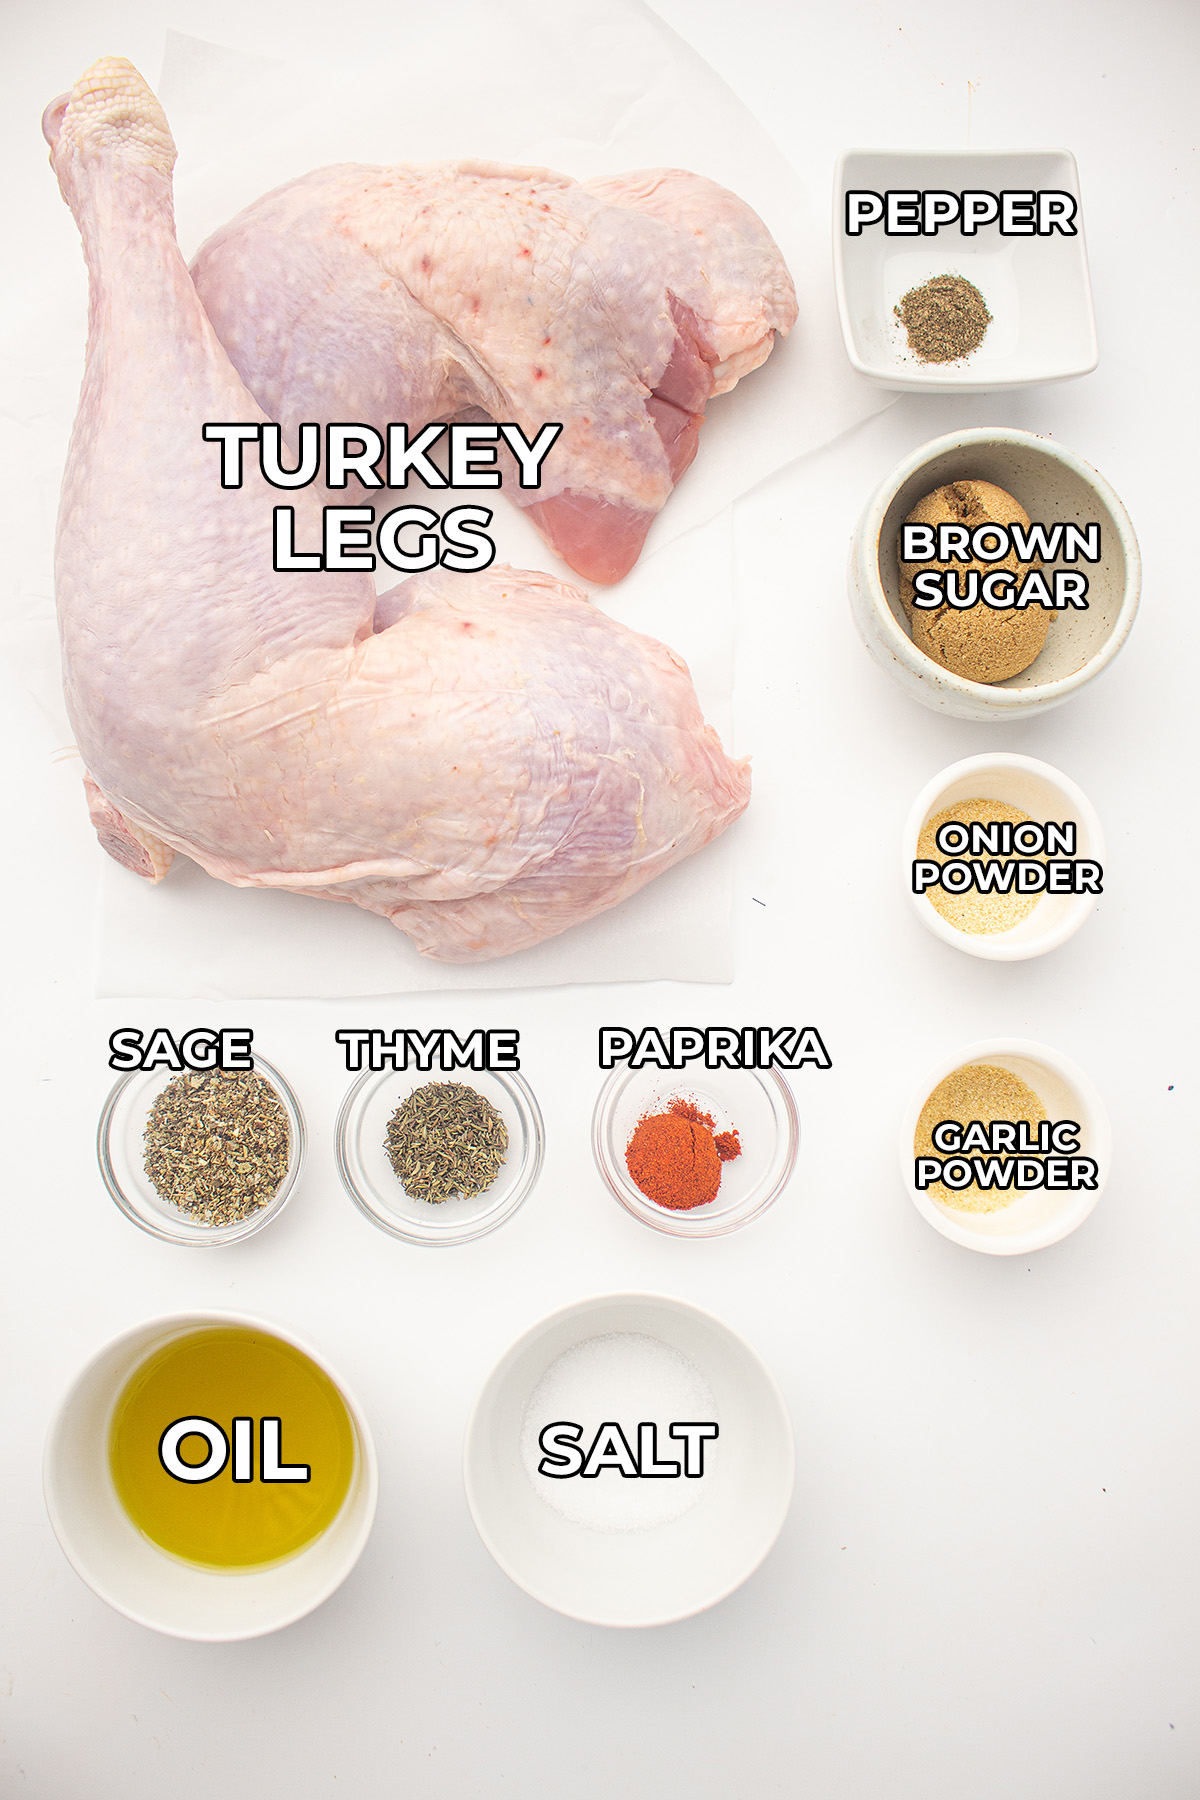 Turkey leg ingredients on a countertop.